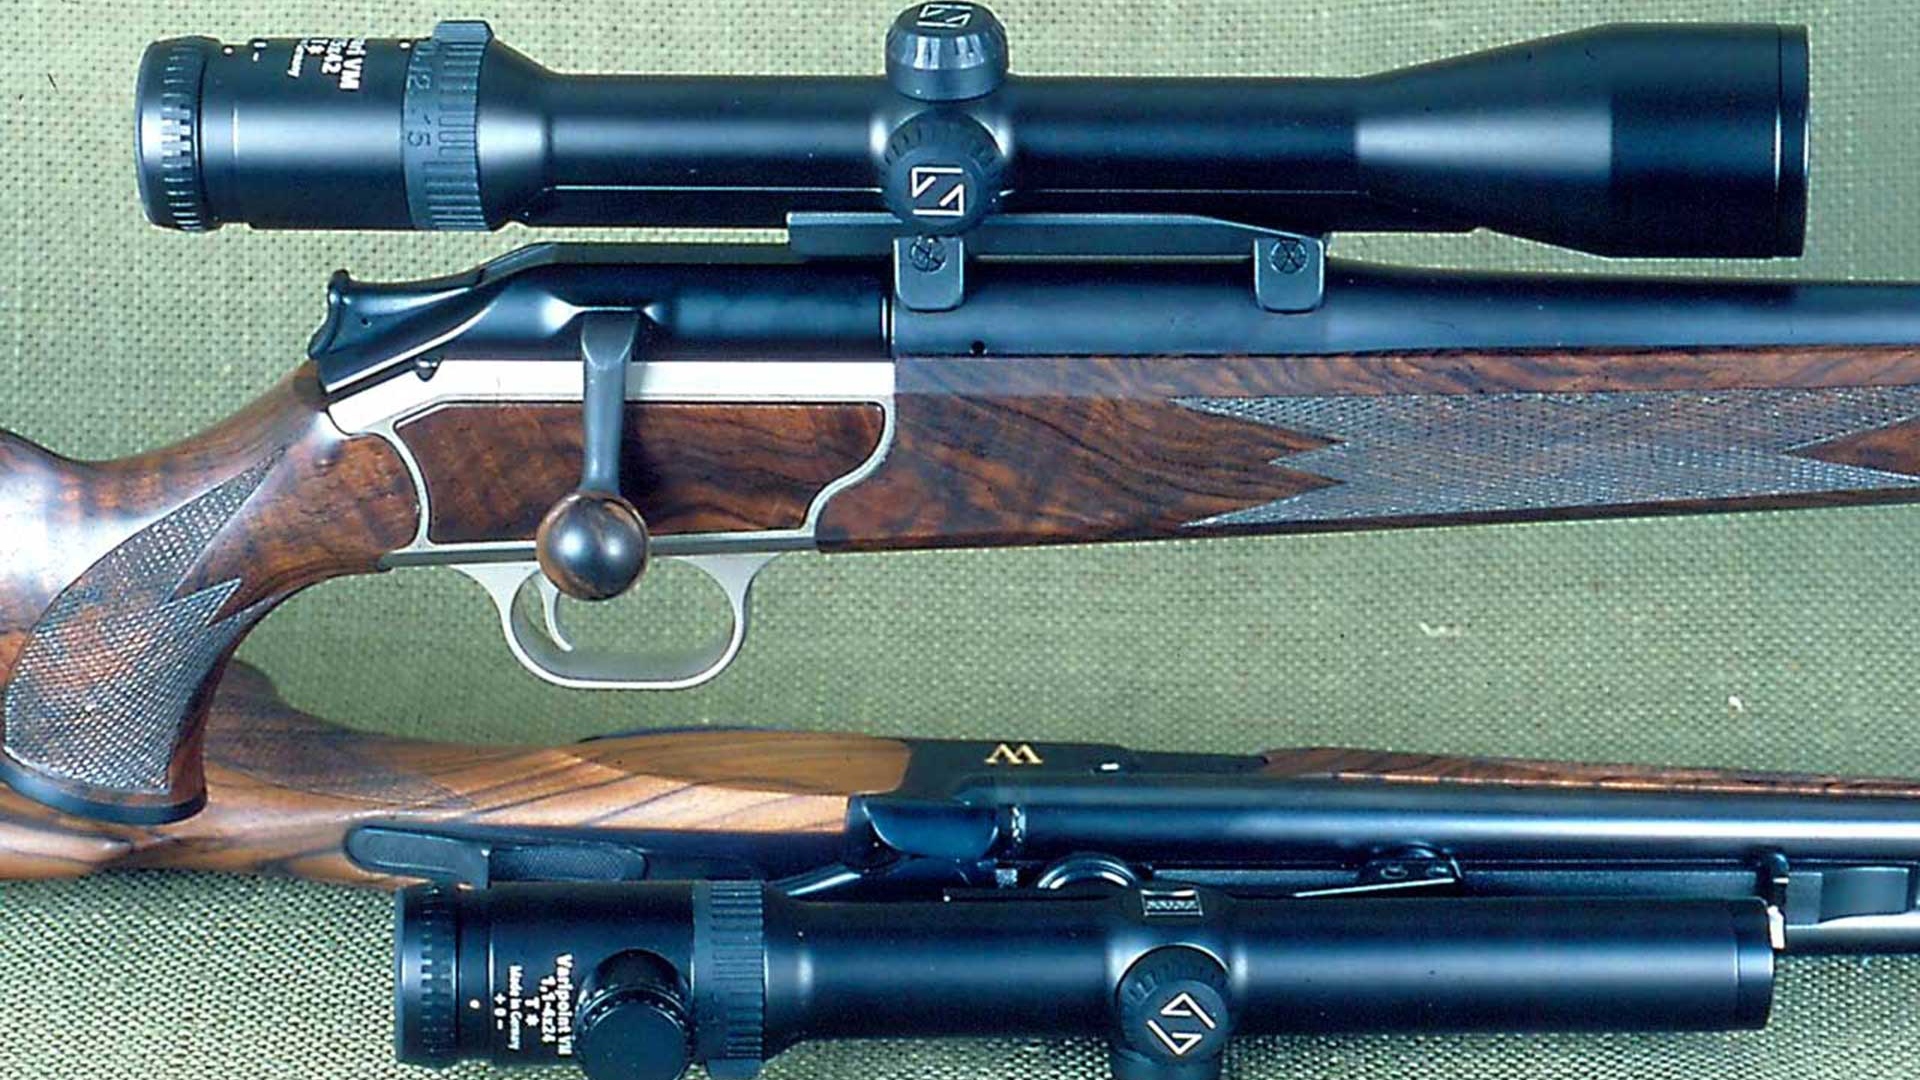 New Victory riflescopes